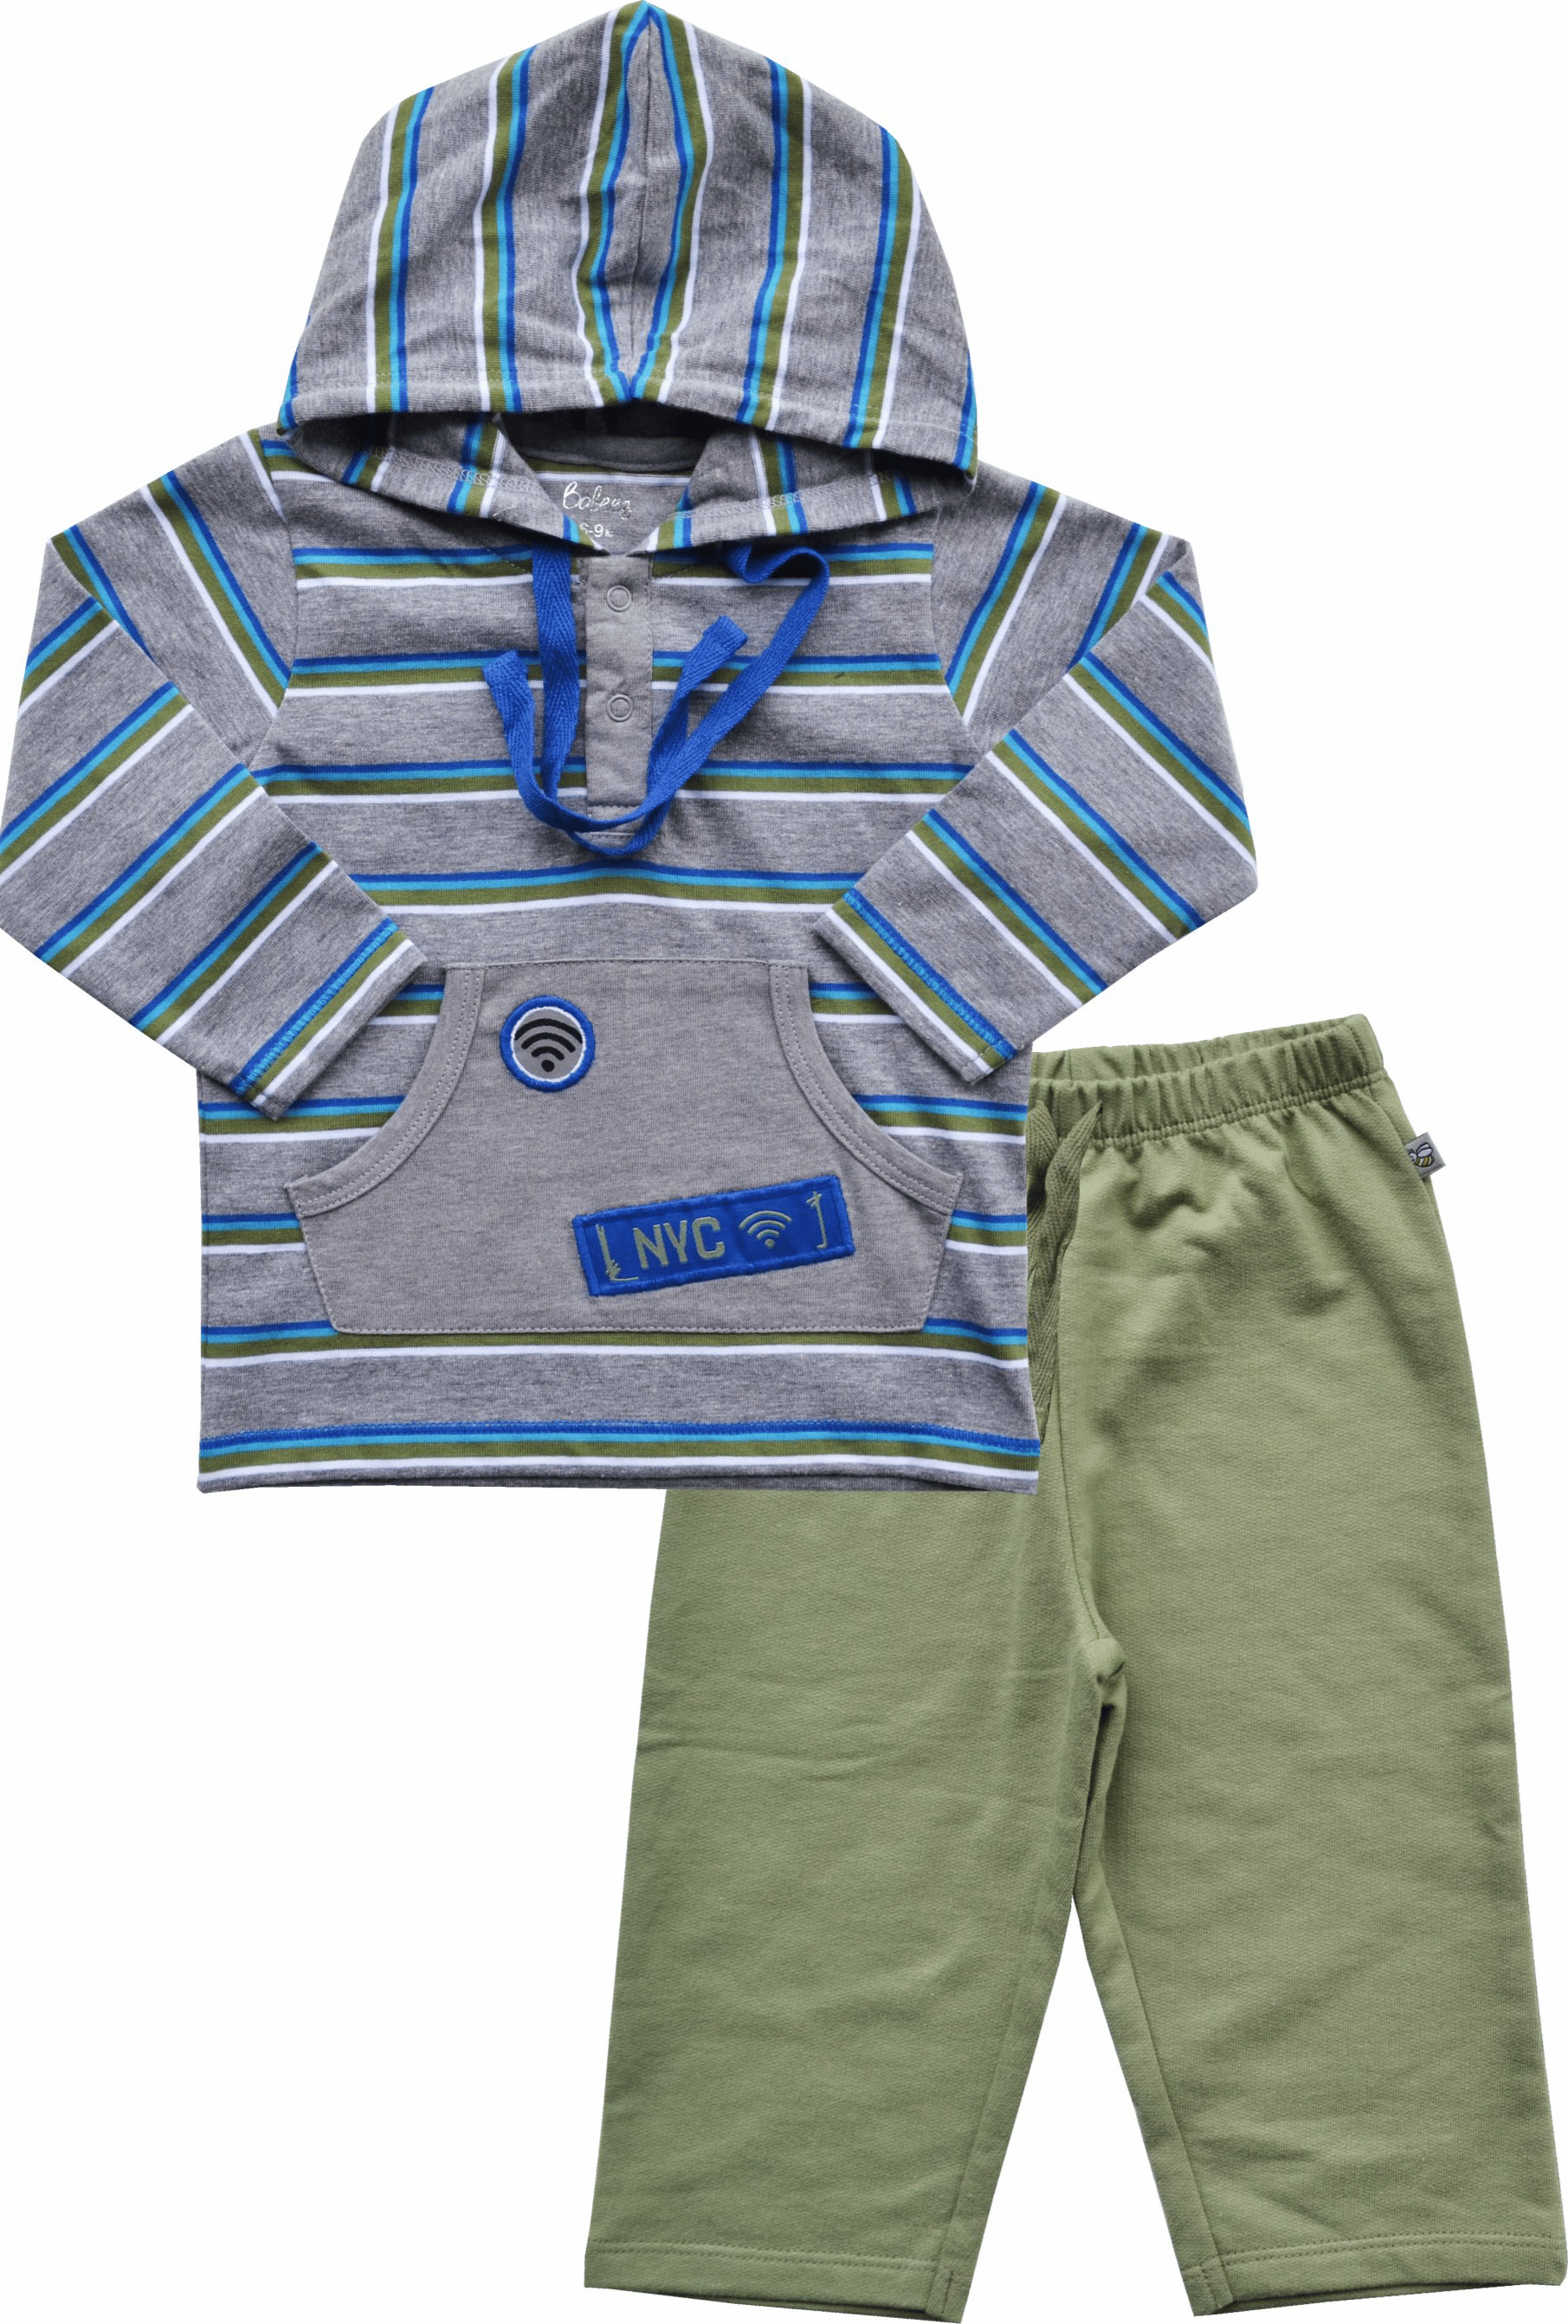 Grey Hoody Striped T-Shirt + Green Pant Set(100% Cotton Interlock)